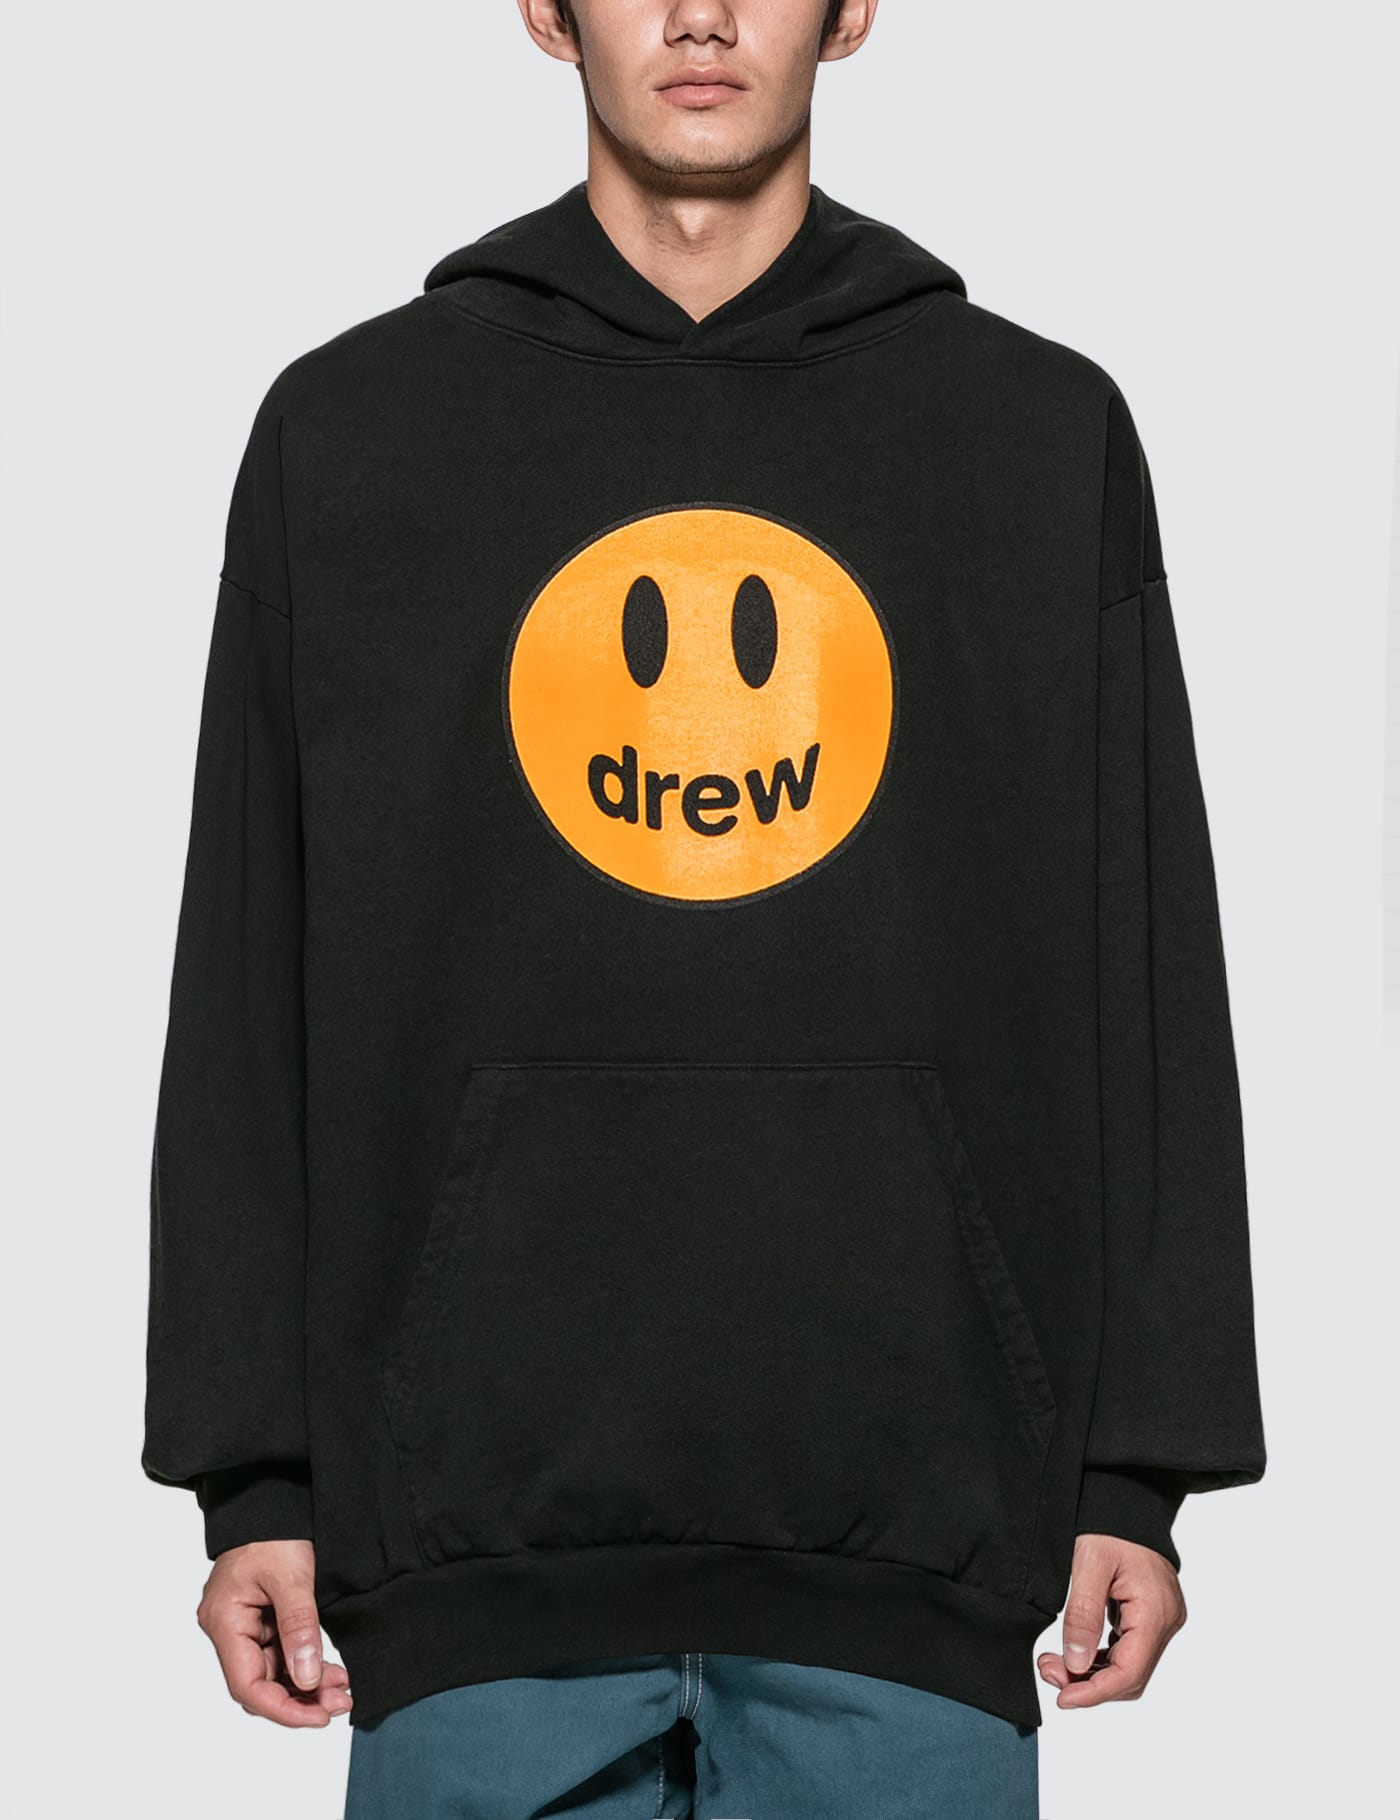 drew house hoodie for sale